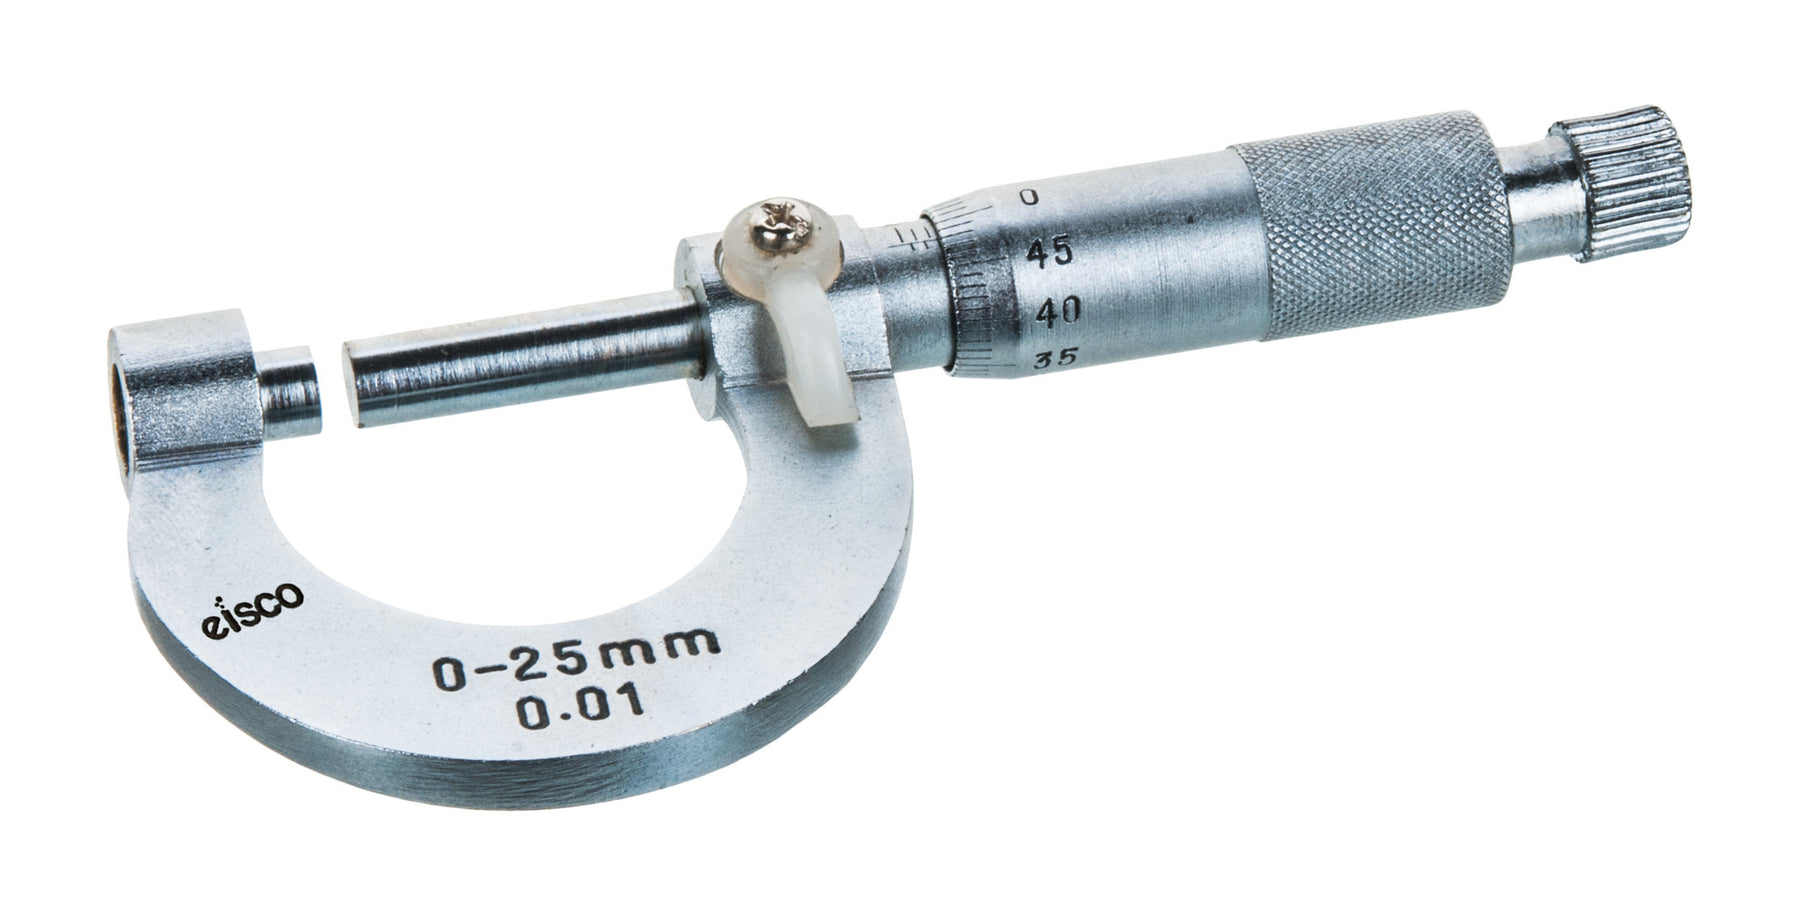 EISCO Micrometer Screw Gauge w/Lock, Nickel Plated Brass - Range 0-25x0.01mm